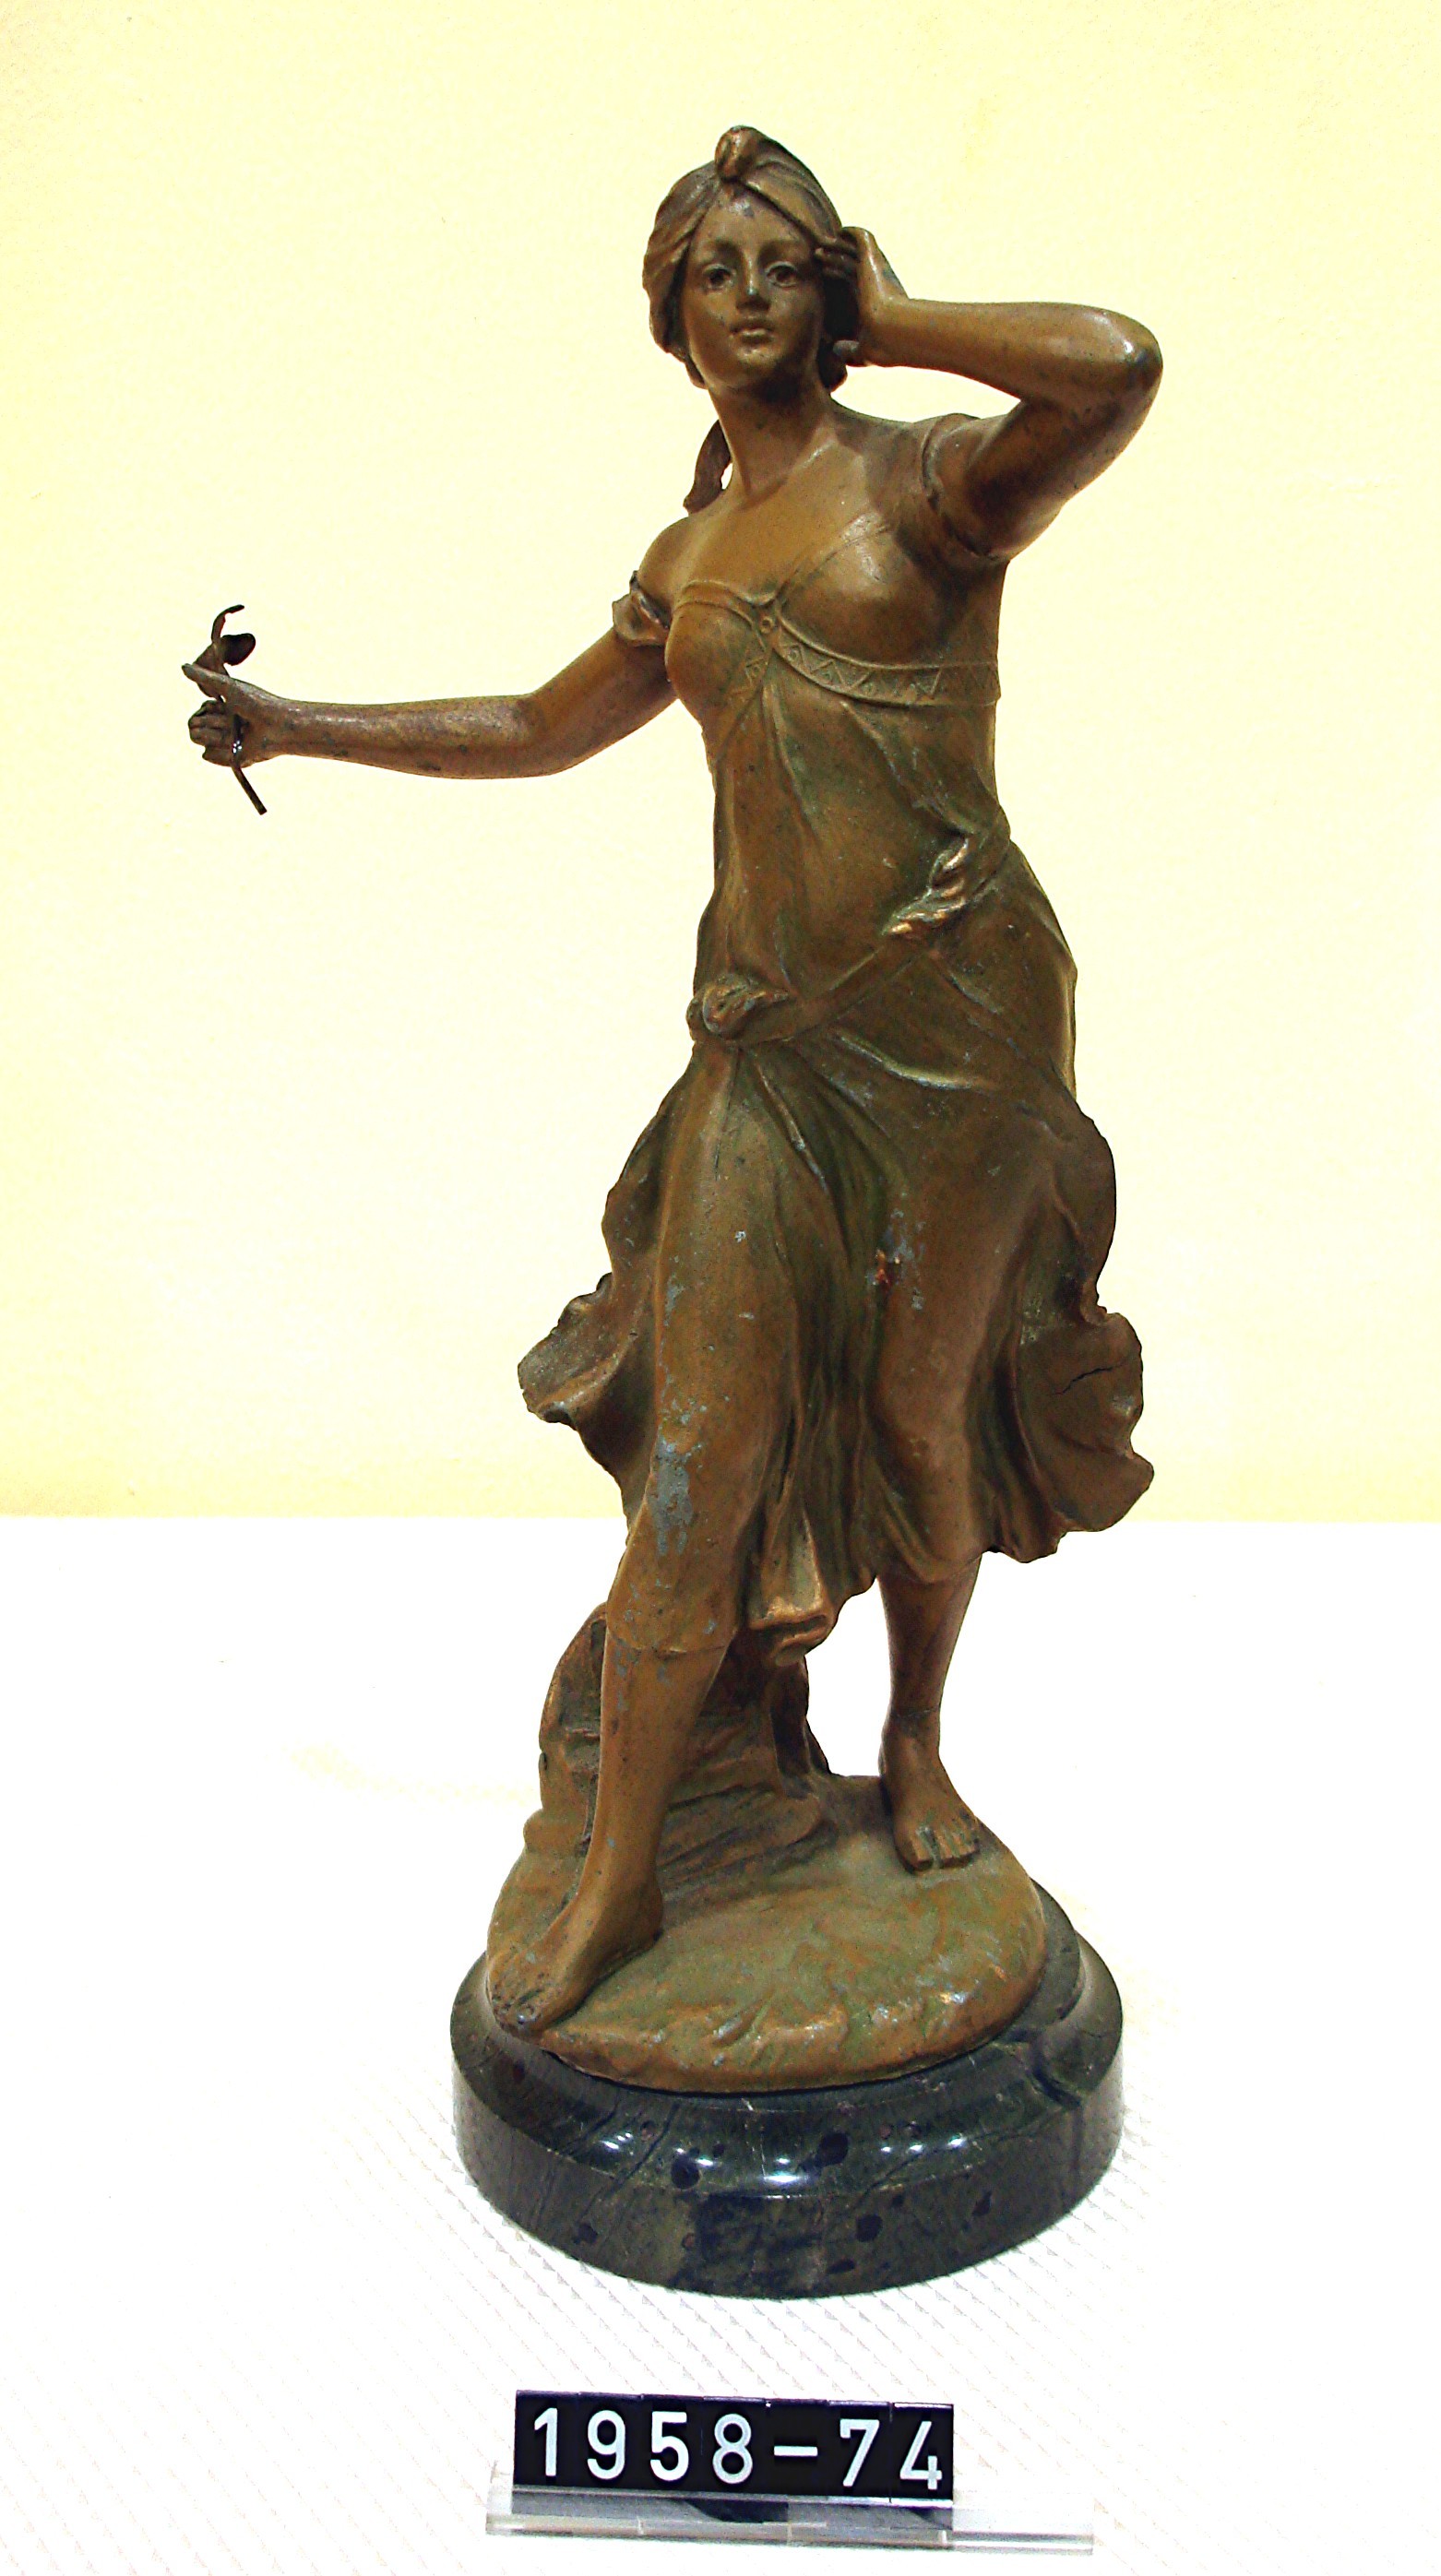 Frauenplastik; Statue aus Zinkguß; Motiv: "Frauengestalt mit Blume"; um 1900 (Stadtmuseum Bad Dürkheim, Museumsgesellschaft Bad Dürkheim e.V. CC BY-NC-SA)